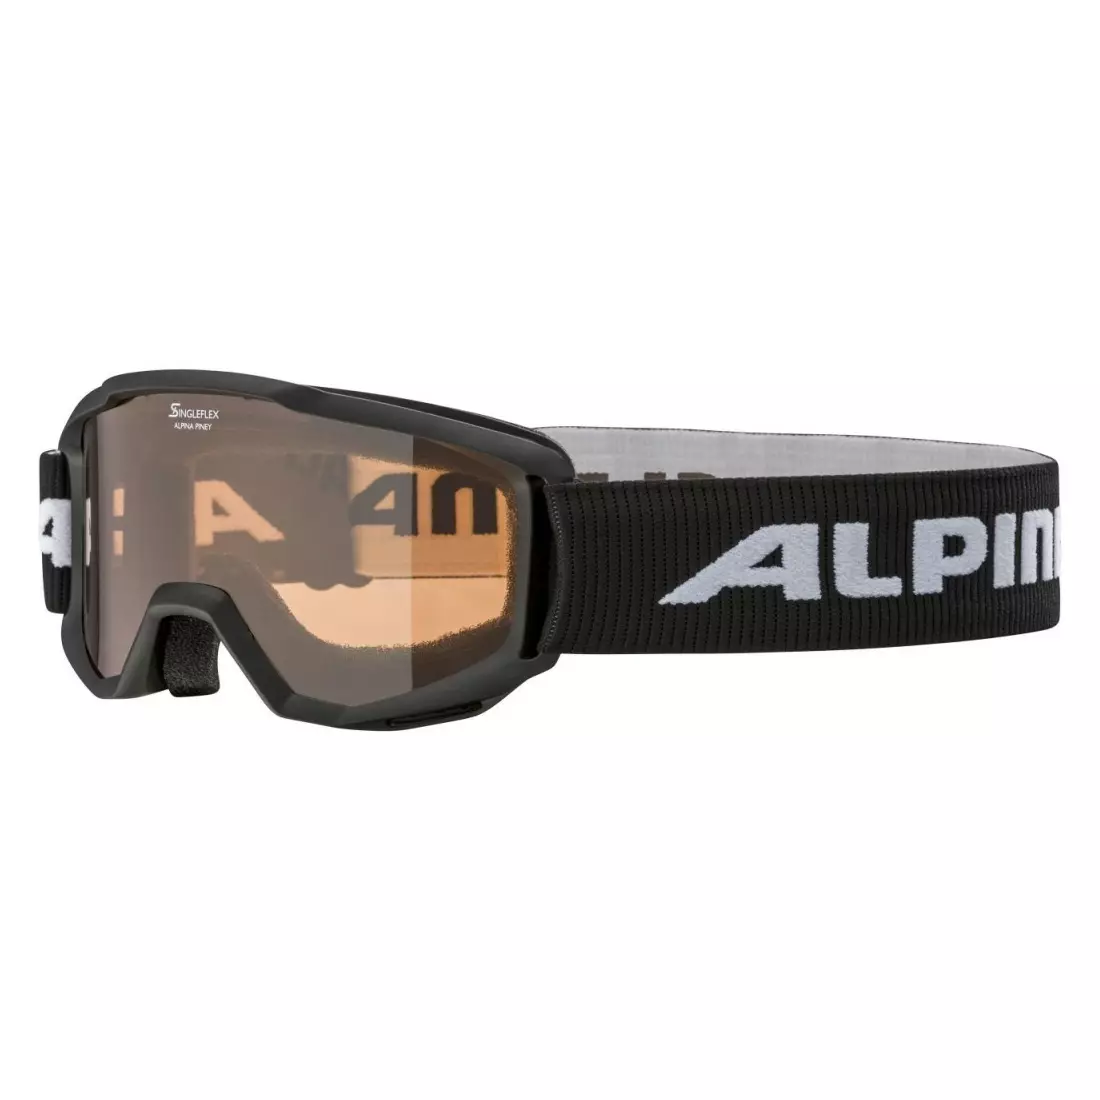 Ski-/Snowboardbrille ALPINA JUNIOR PINEY BLACK A7268431